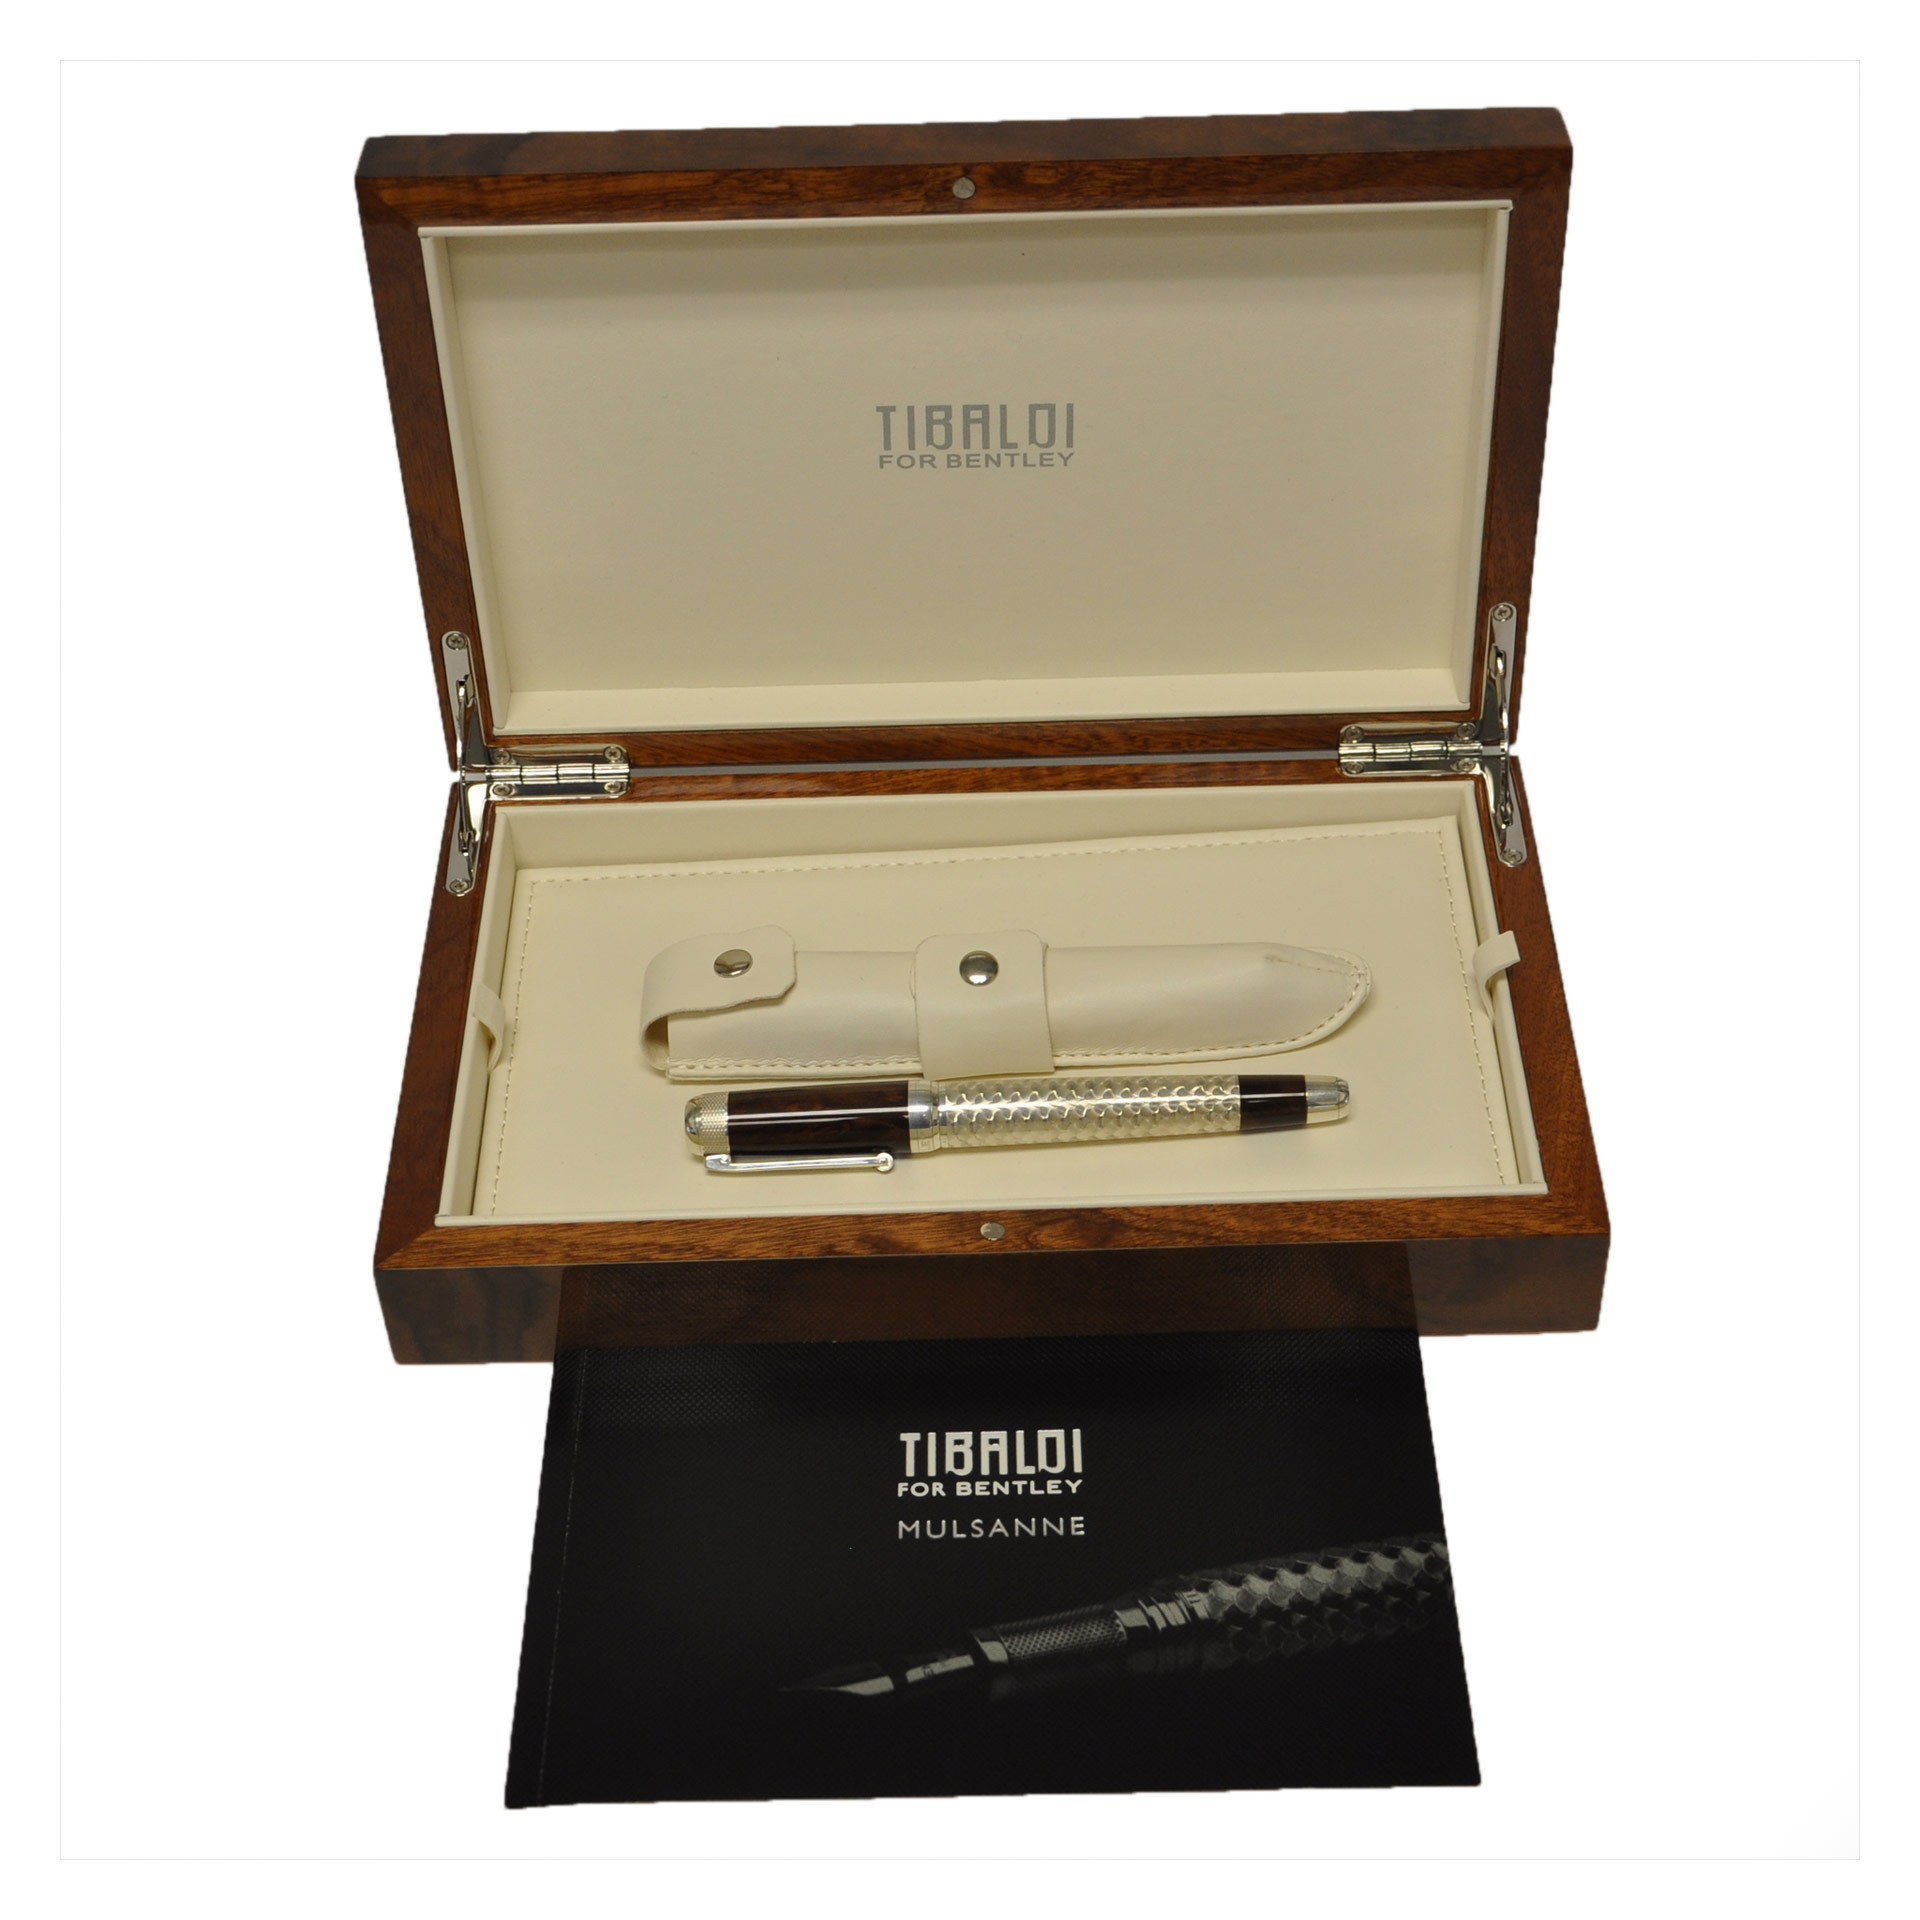 Limited edition Tibaldi for Bentley Mulsanne fountain pen with 18k nib 37/ 90.